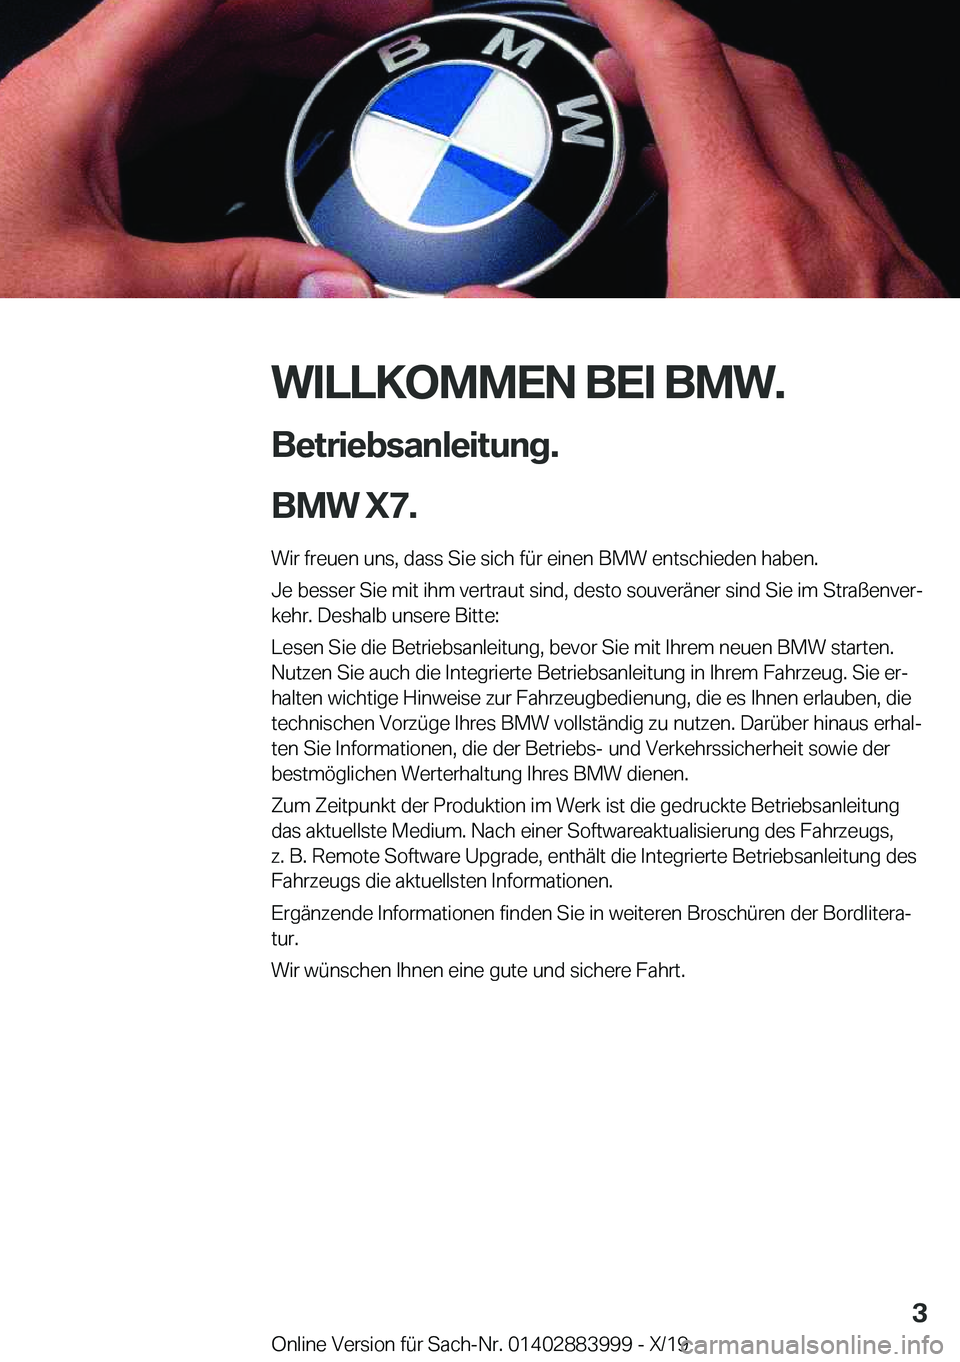 BMW X7 2020  Betriebsanleitungen (in German) �W�I�L�L�K�O�M�M�E�N��B�E�I��B�M�W�.�B�e�t�r�i�e�b�s�a�n�l�e�i�t�u�n�g�.
�B�M�W��X�7�. �W�i�r��f�r�e�u�e�n��u�n�s�,��d�a�s�s��S�i�e��s�i�c�h��f�